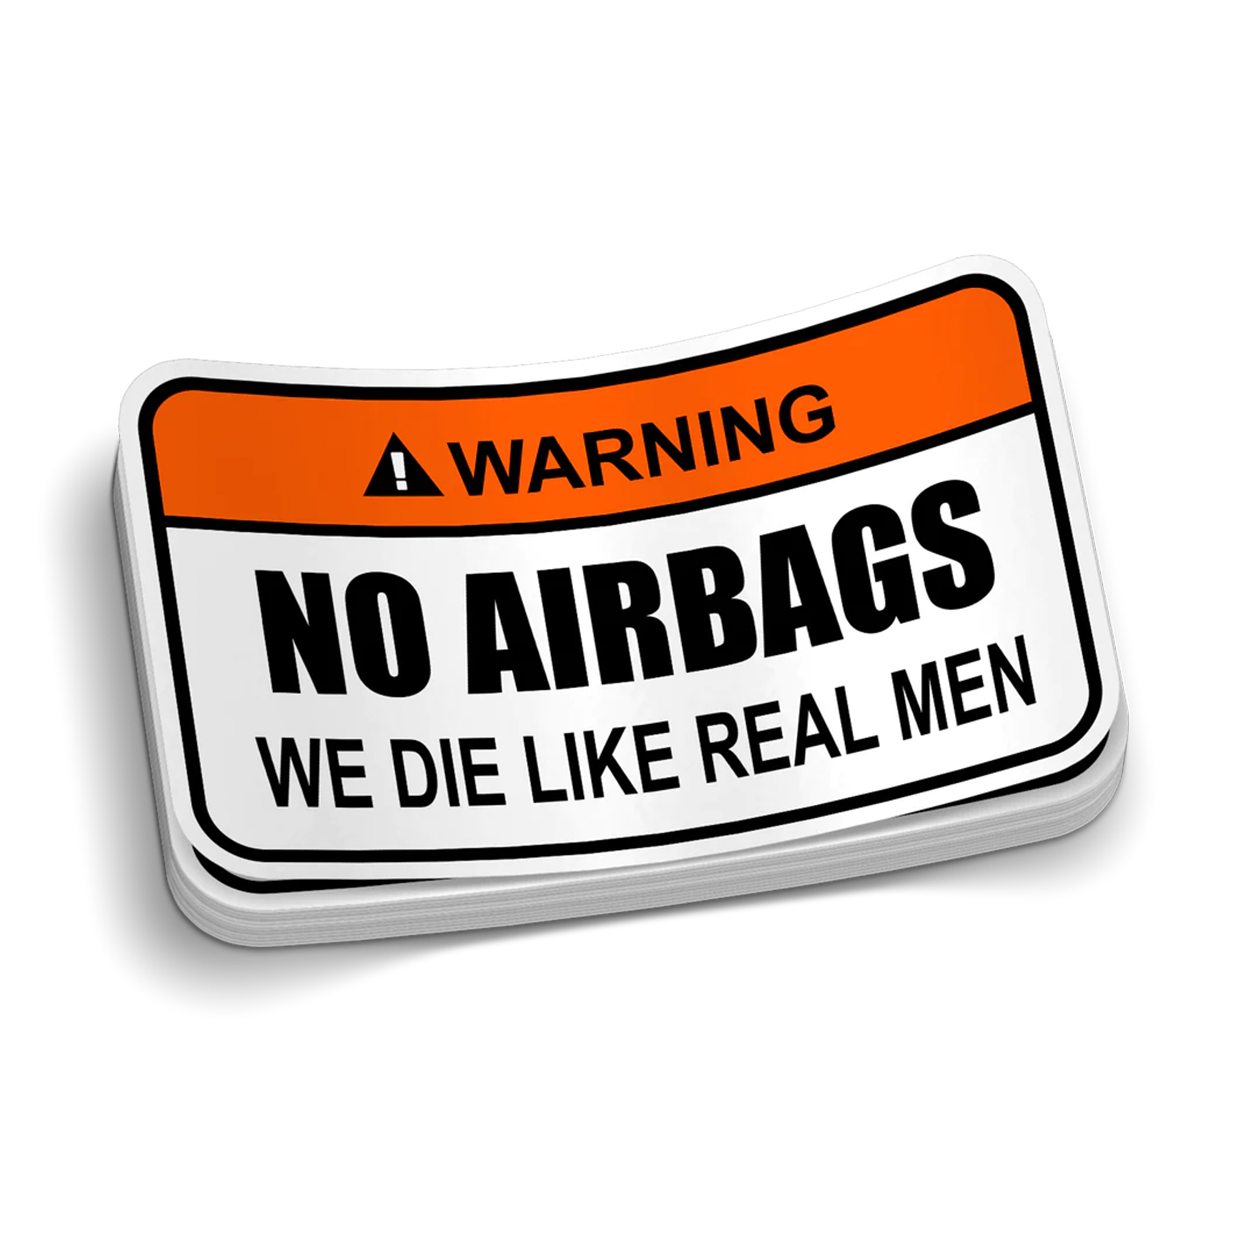 No Airbags - Sticker